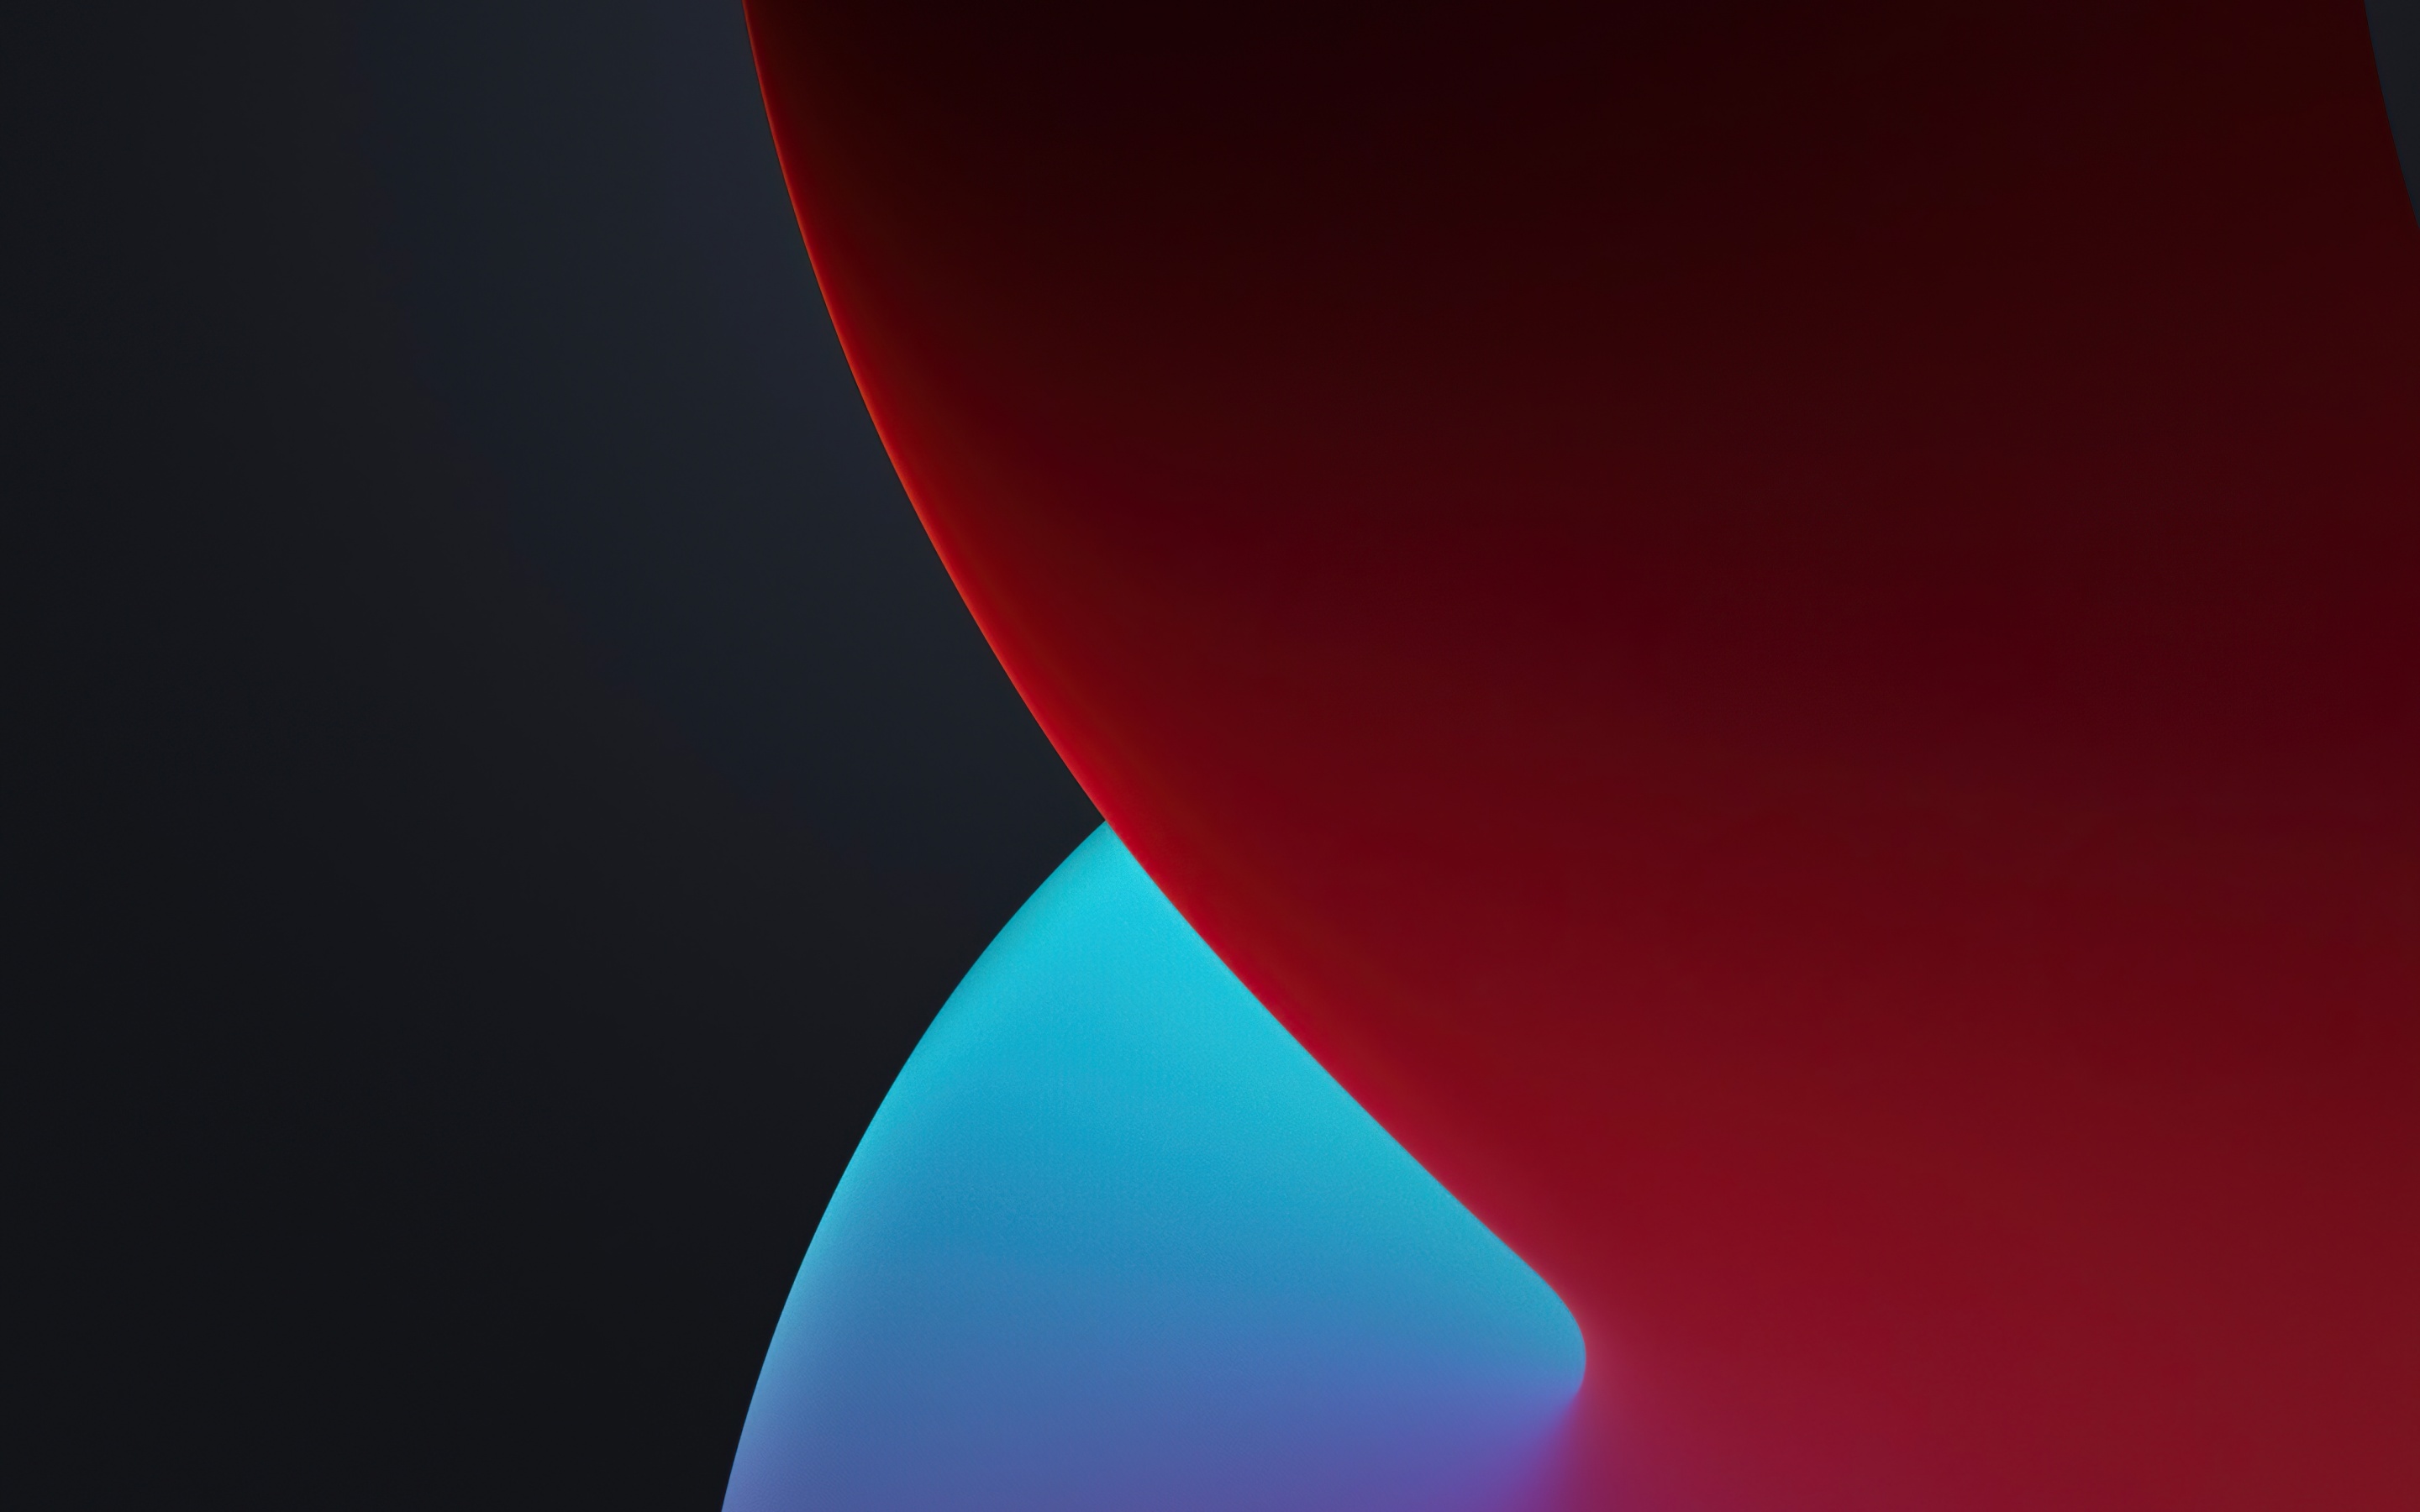 iOS 14 4K Wallpaper, WWDC, 2020, iPhone 12, iPadOS, Dark, Red, Stock